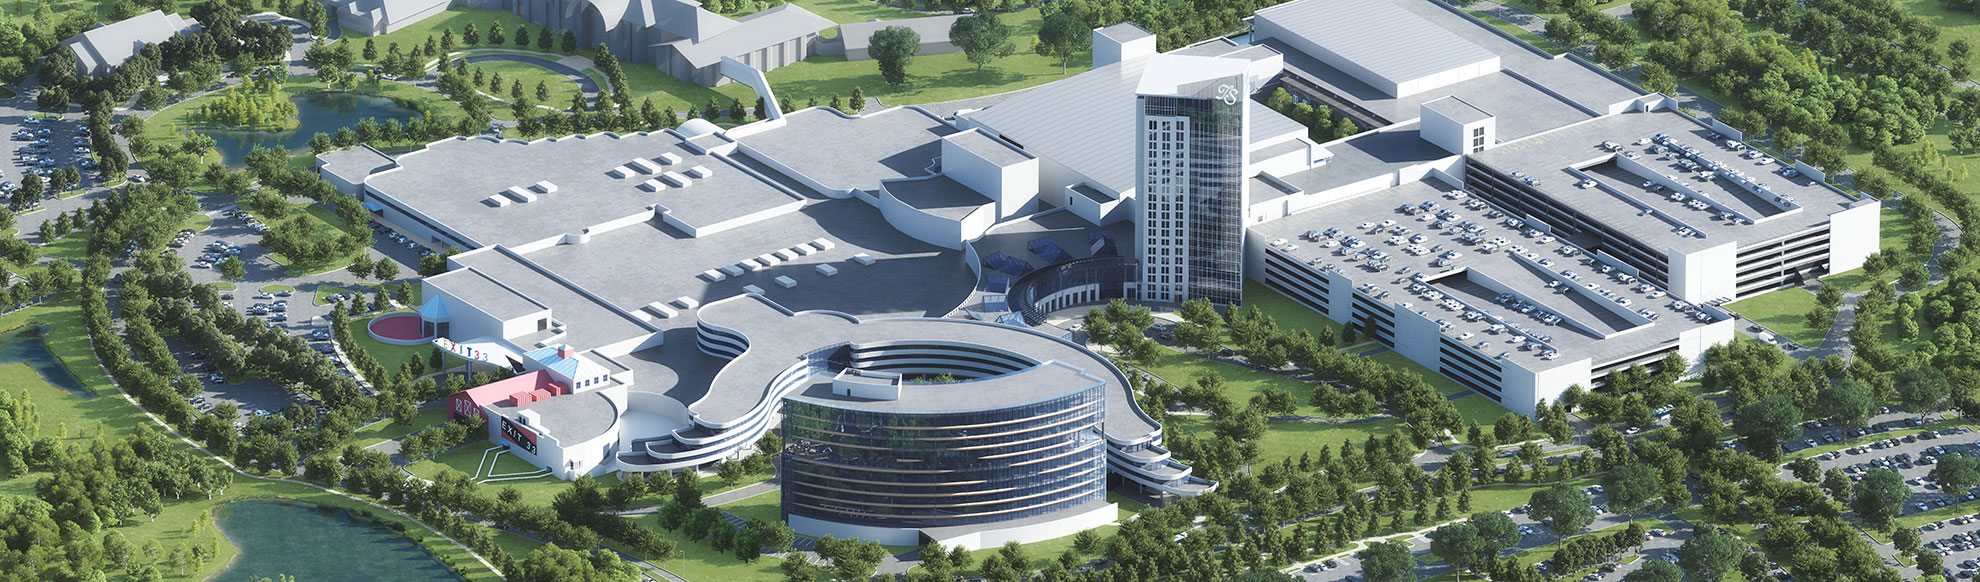 aerial image of the turning stone resort casino campus